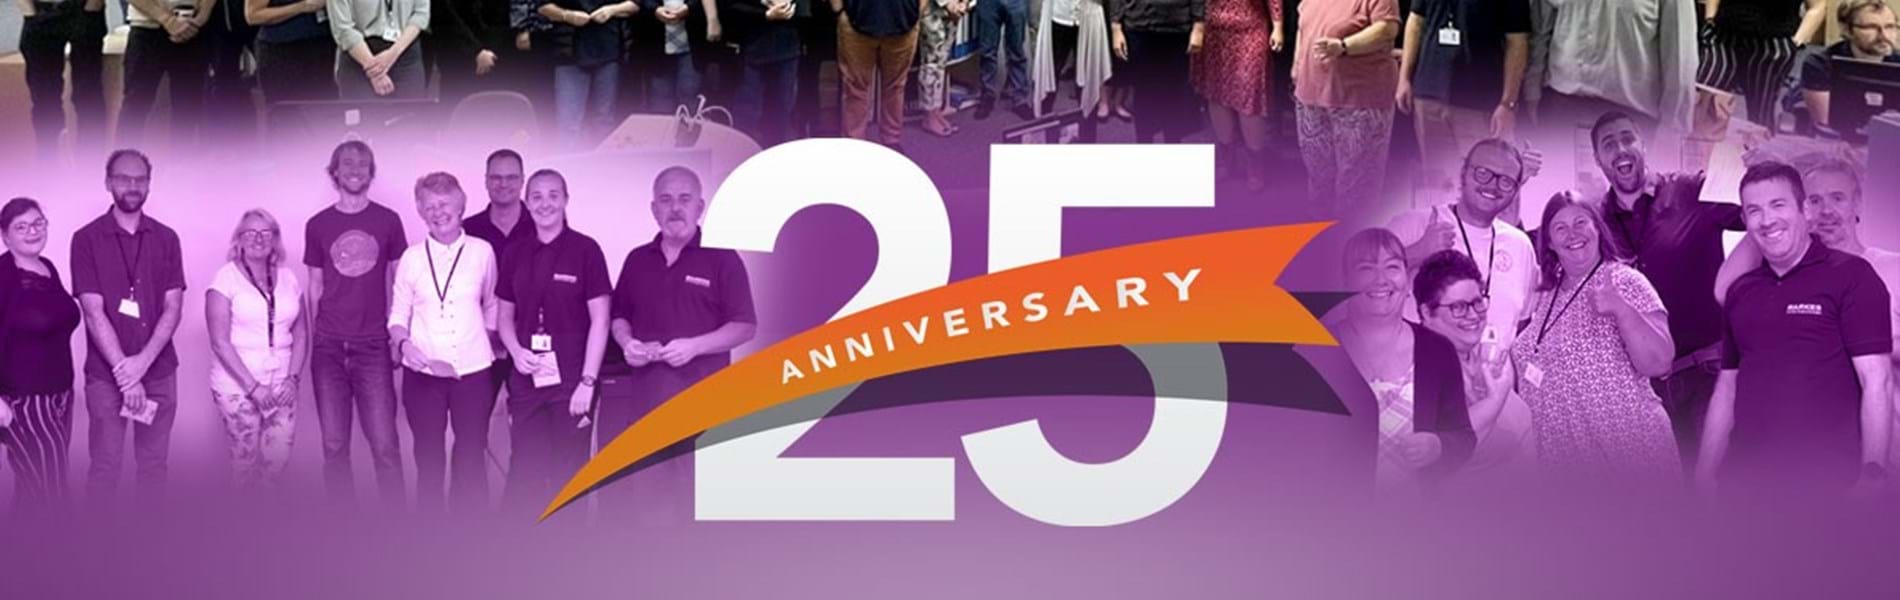 Markes celebrates its 25th Anniversary